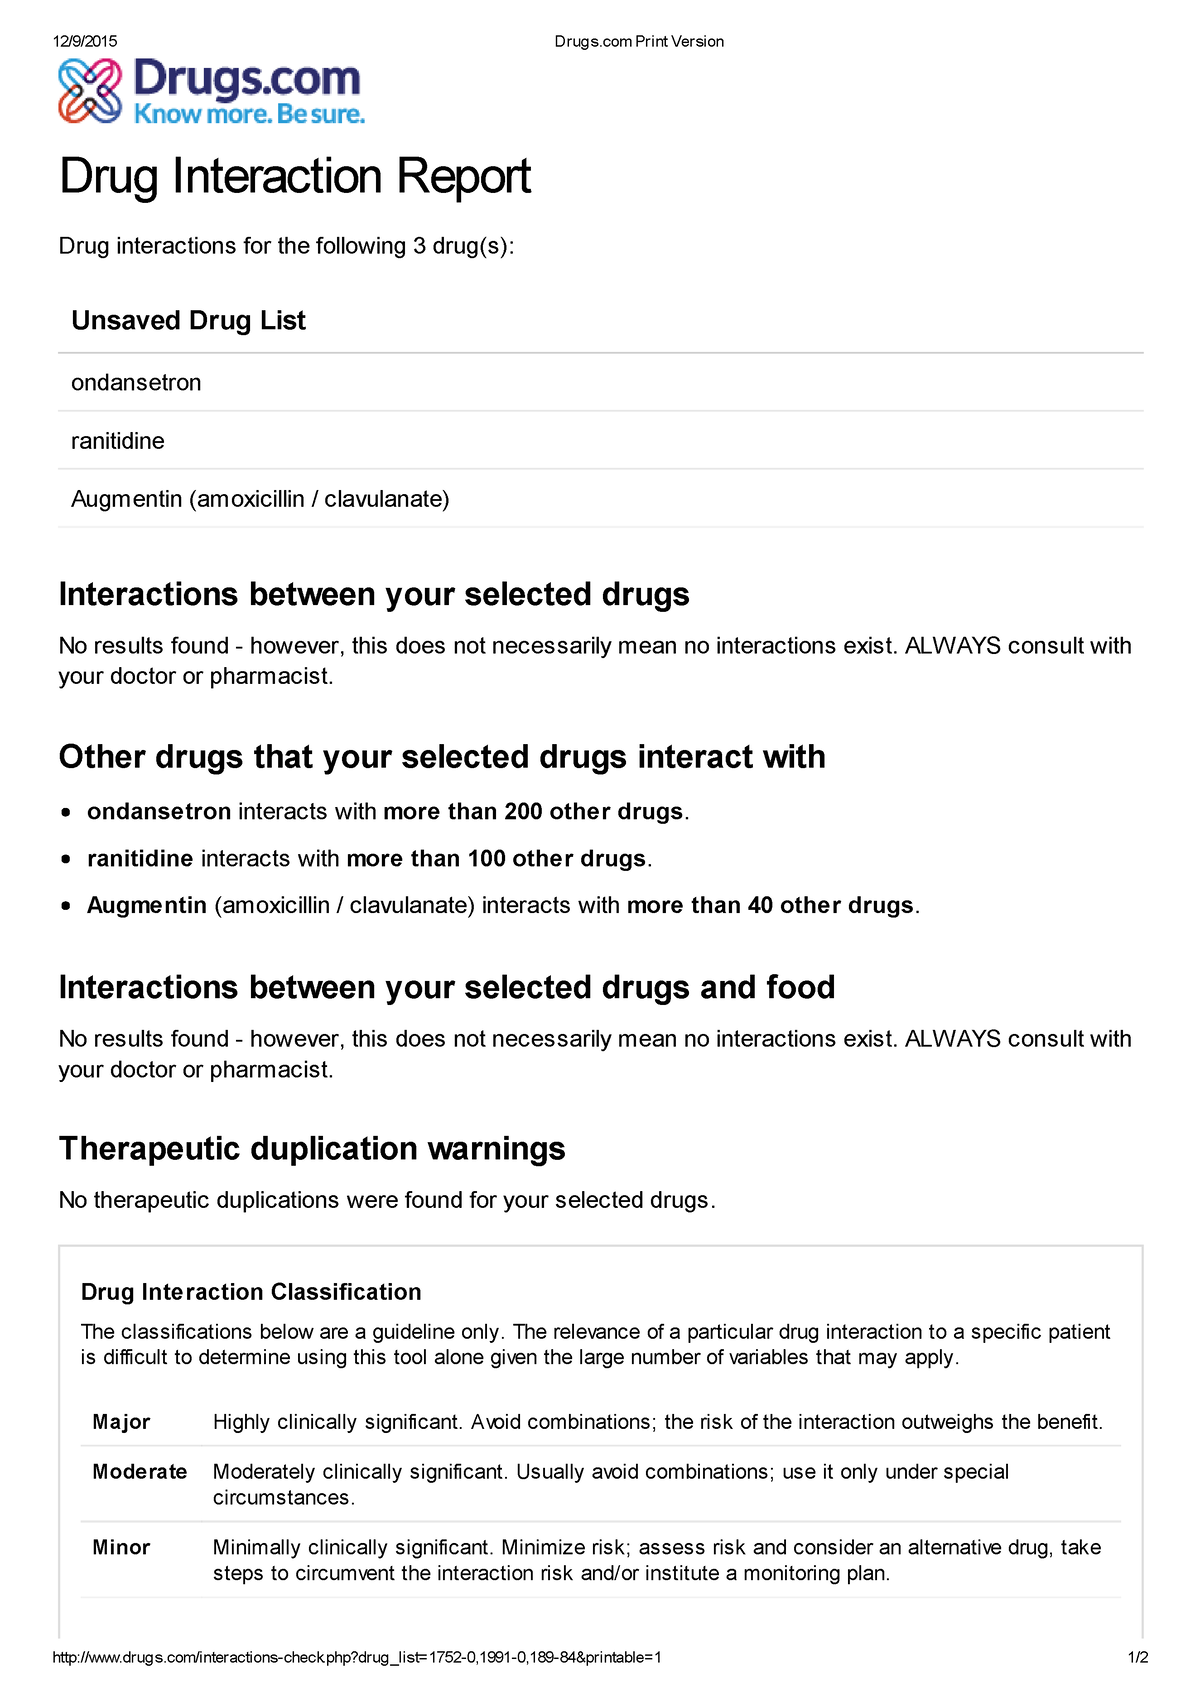 drugs-php-drug-list-1752-0-19910-18984-printable-1-1-drug